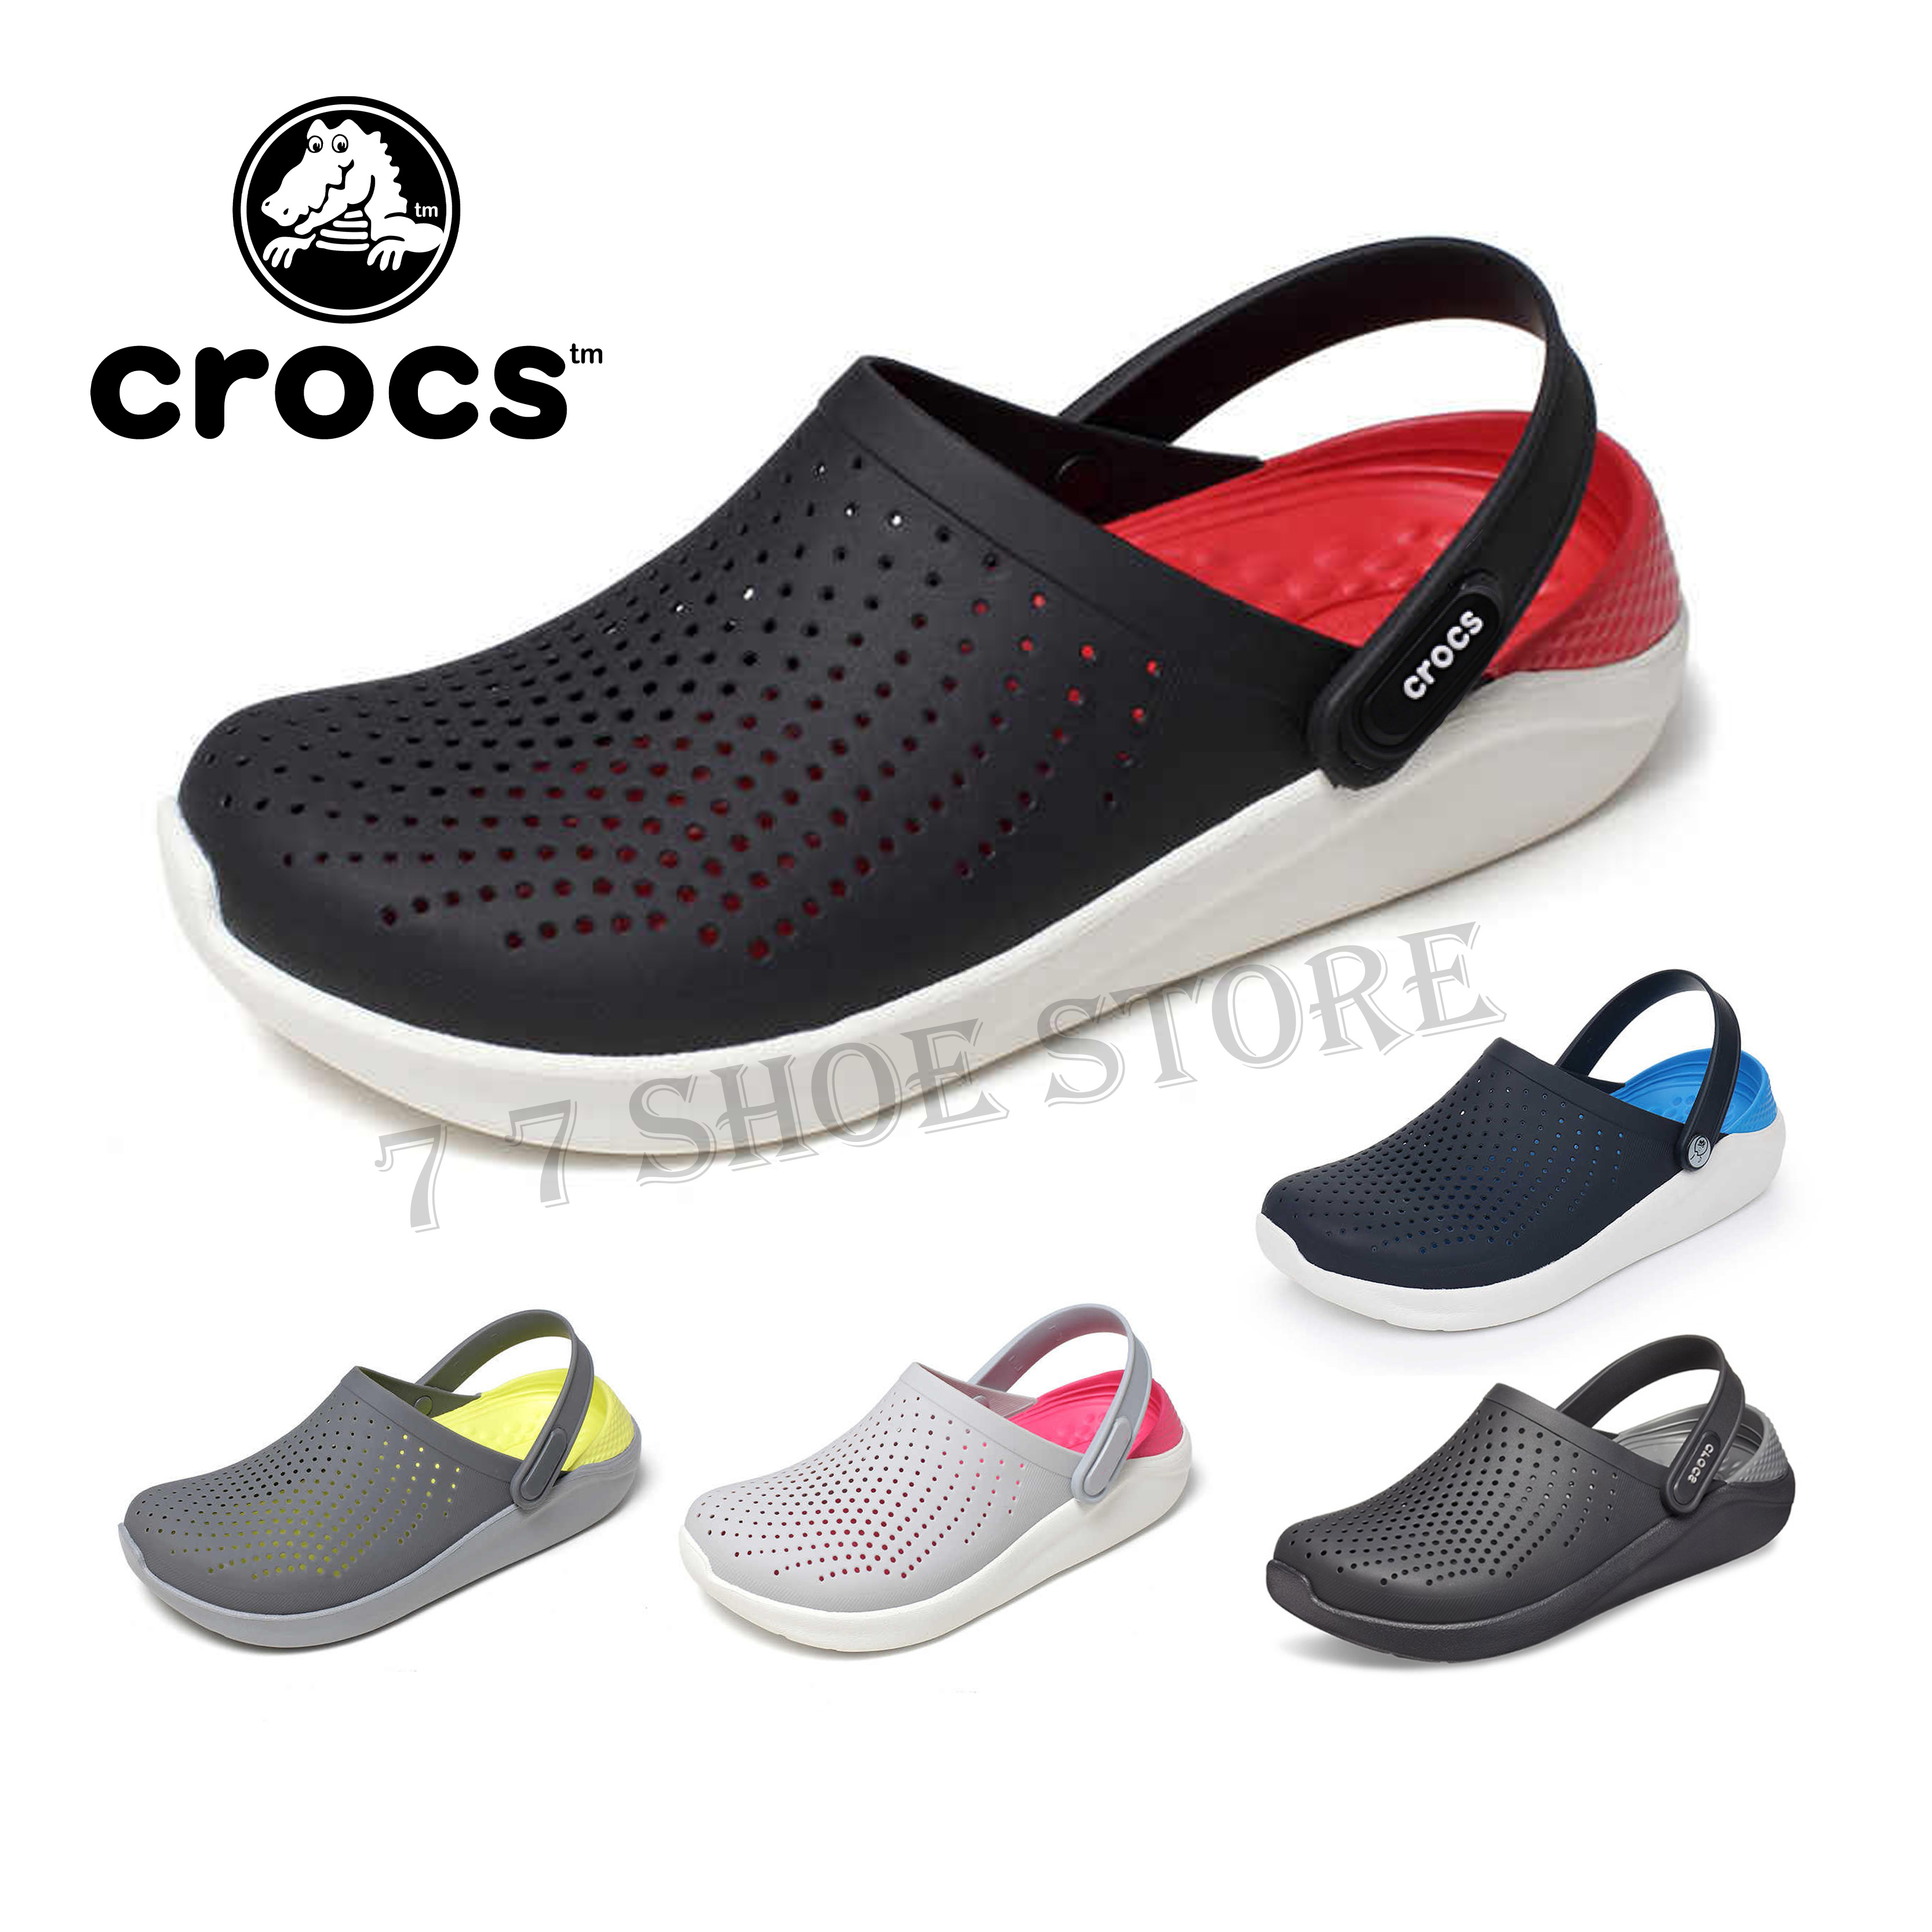 "crocss Literide Beach Shoes: Best-Selling Unisex Originals, On Sale"